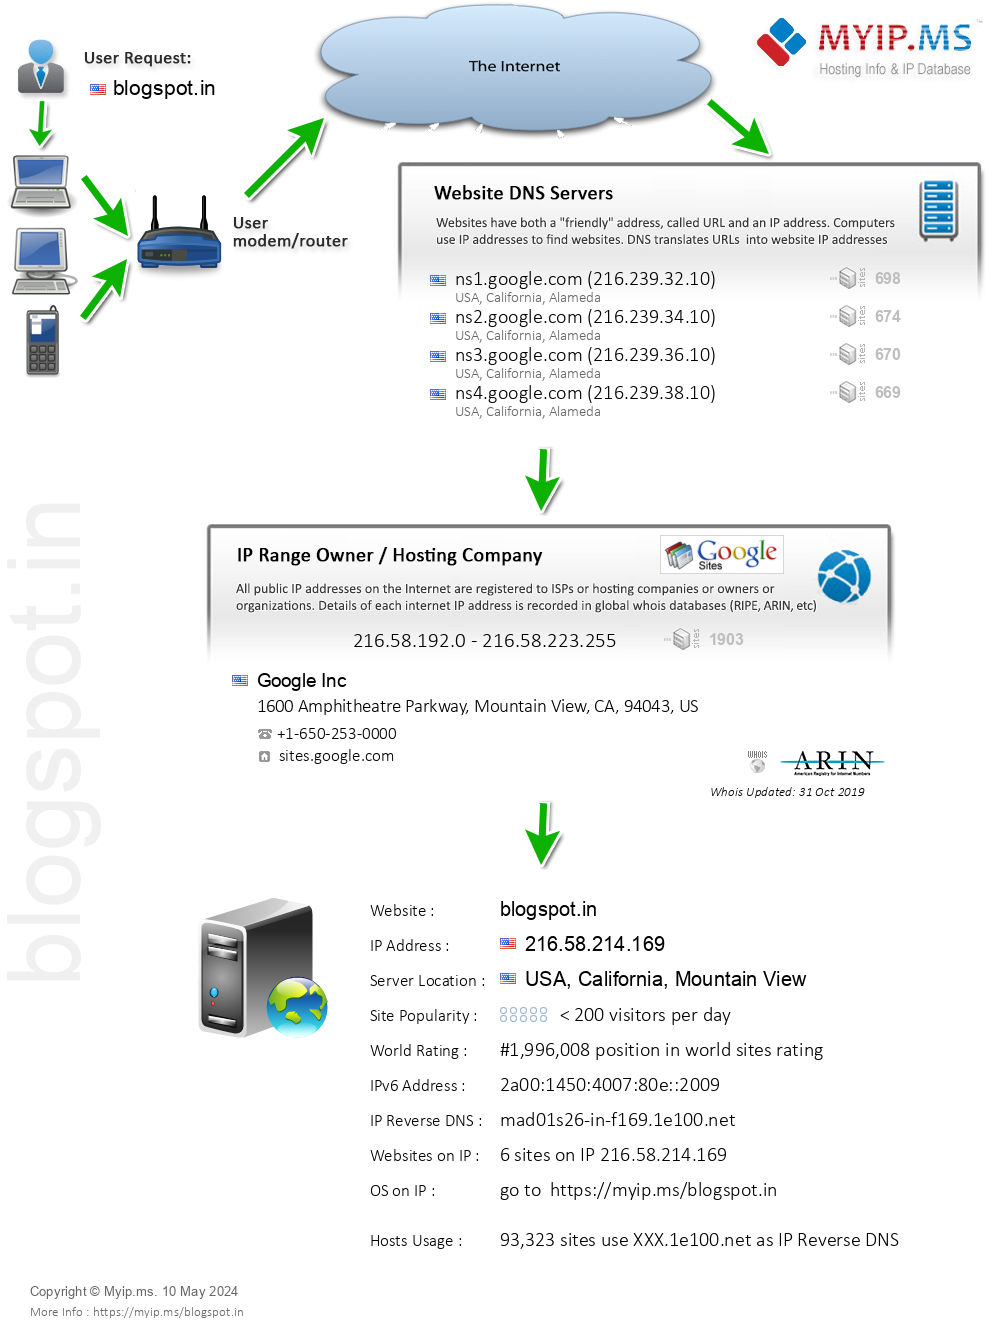 Blogspot.in - Website Hosting Visual IP Diagram